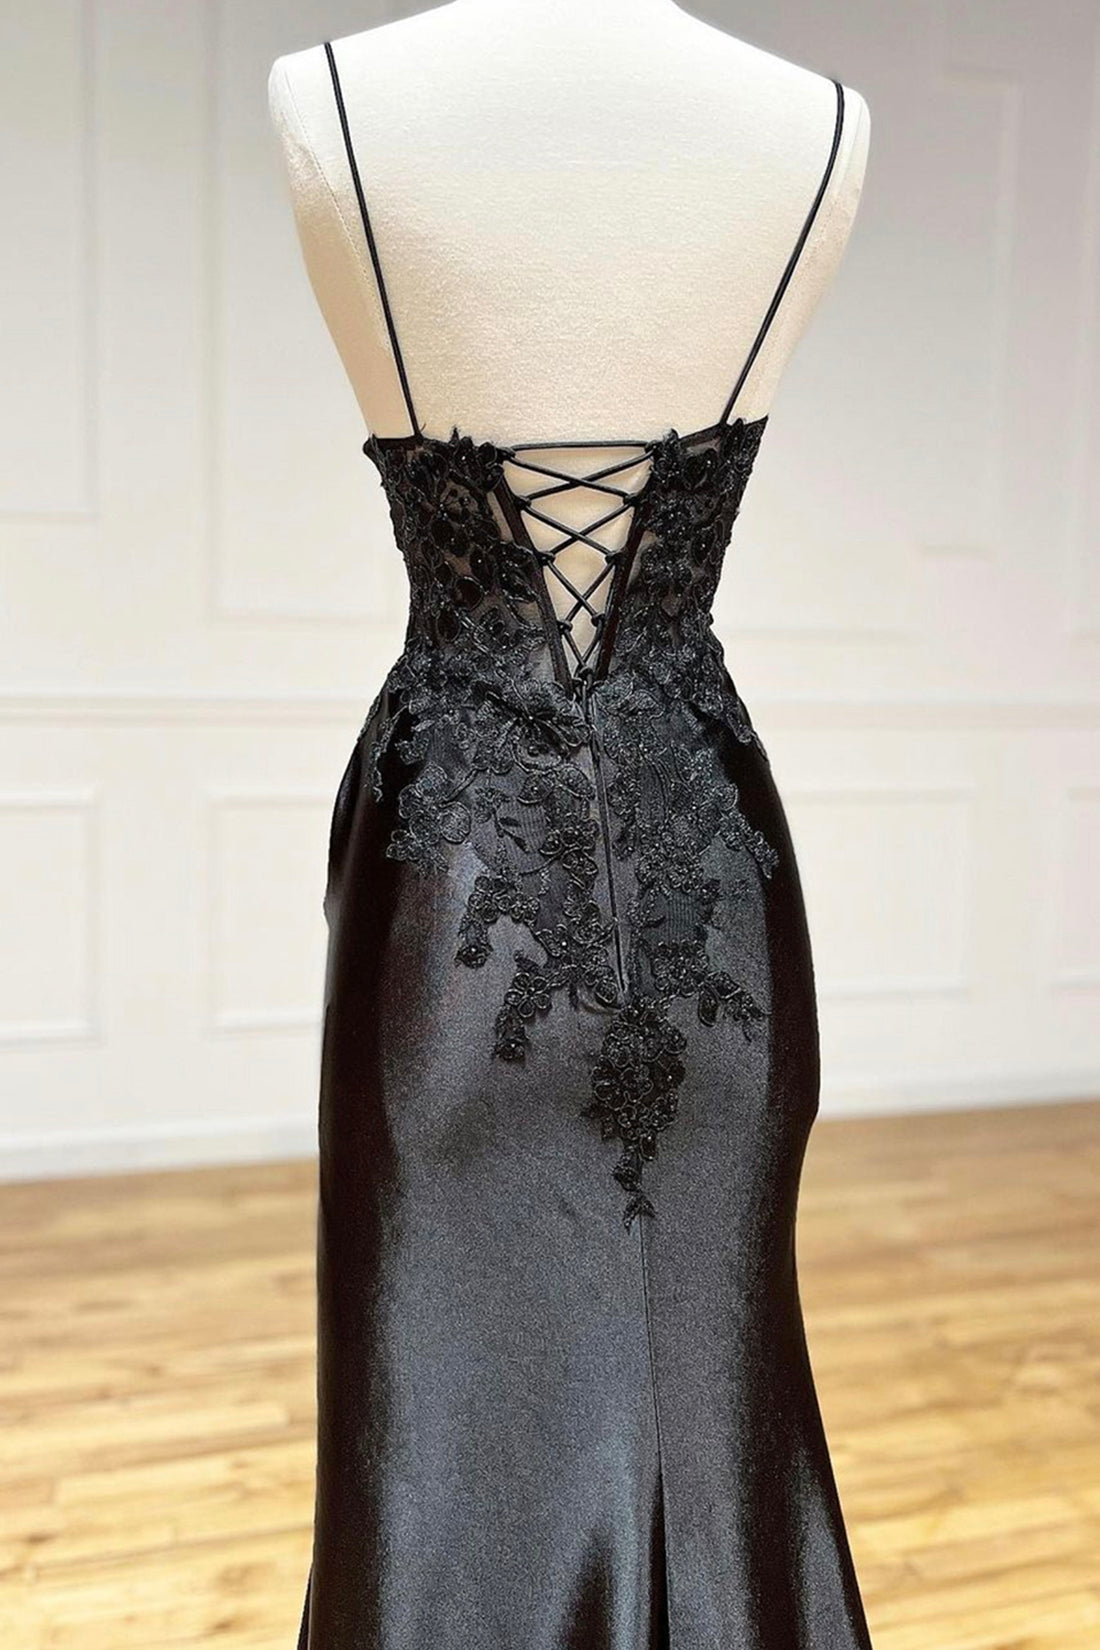 Black V-Neck Lace Long Formal Dress, Black Spaghetti Strap Evening Gown with Leg Slits